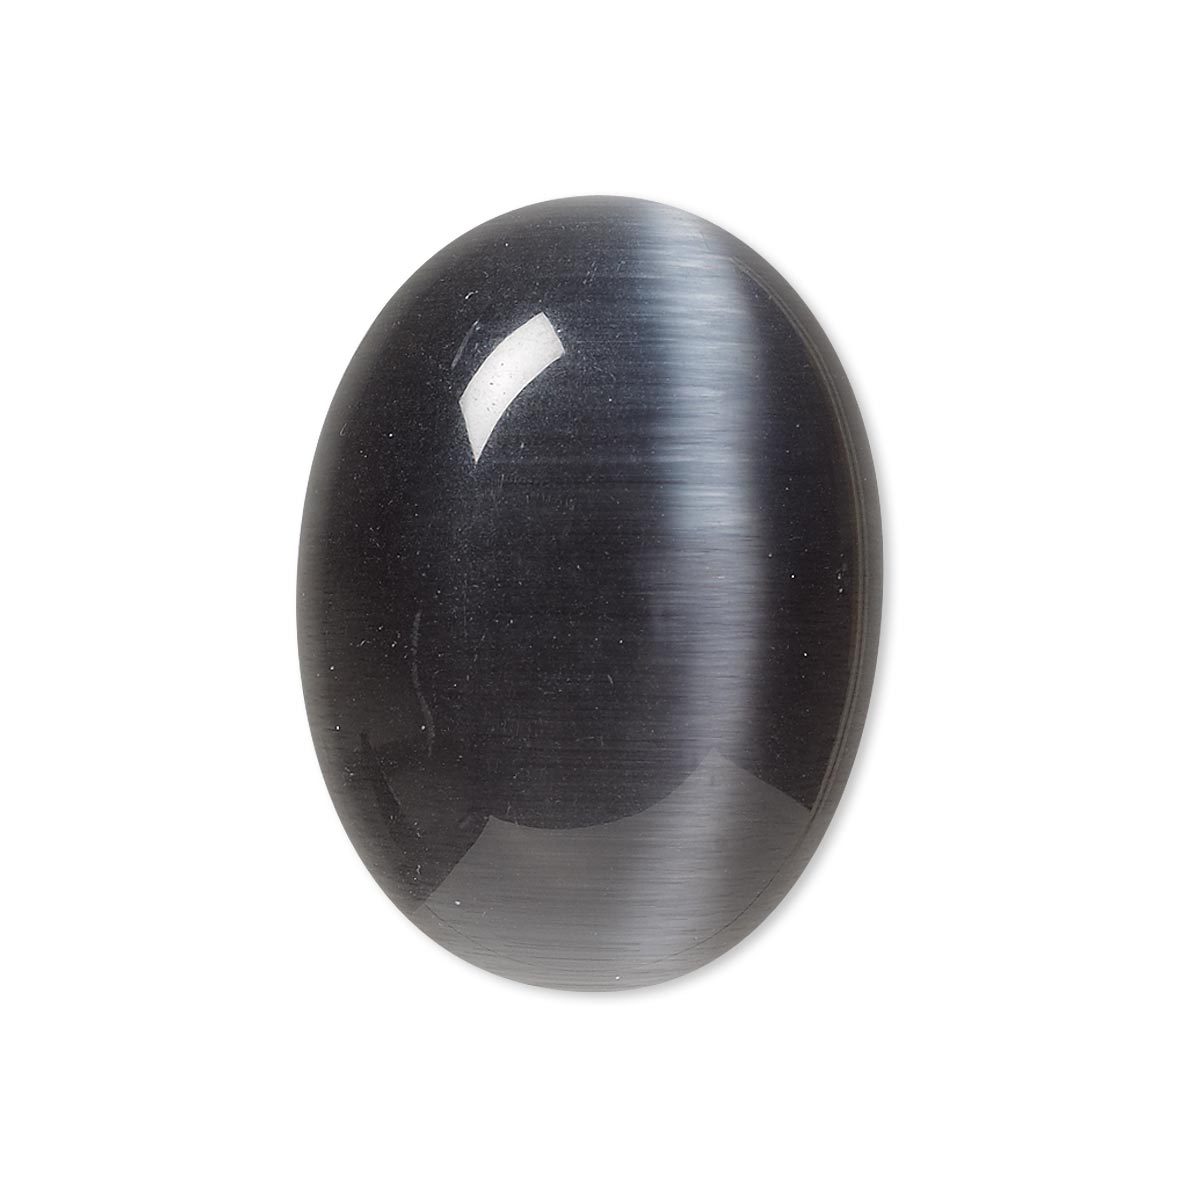 30x22 Black Cat's Eye glass stone